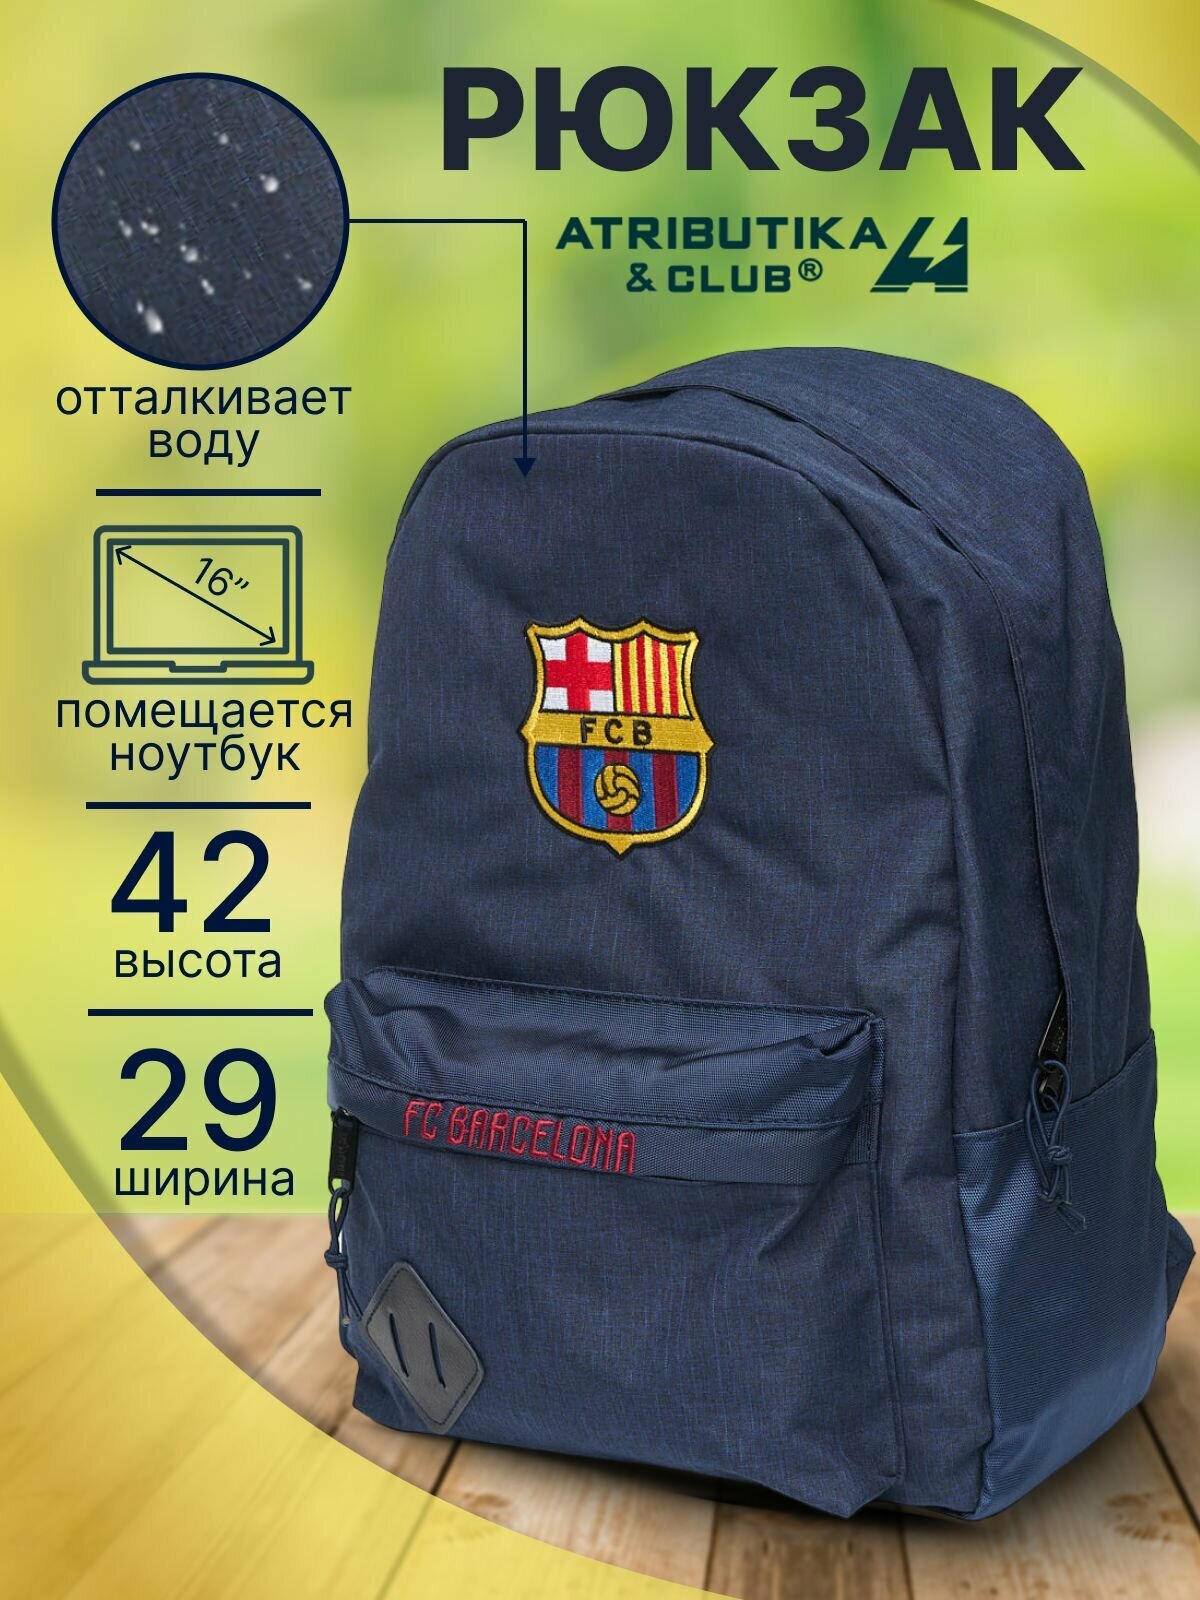 Рюкзак спортивный с логотипом ФК Барселона / FC Barcelona / Atributika & Club